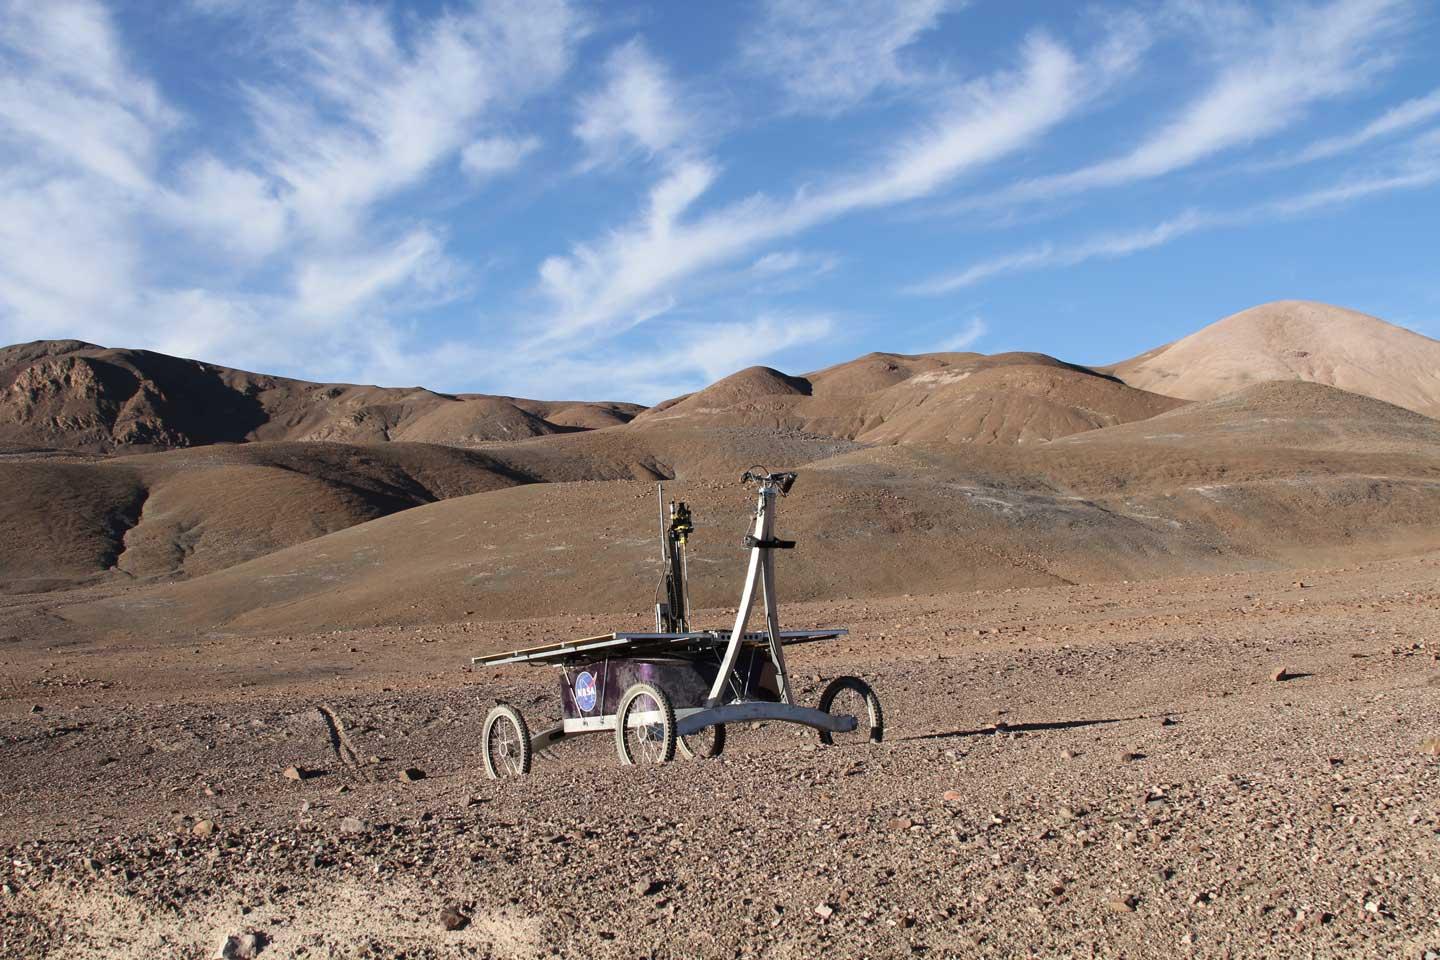 Zoë rover at Atacama